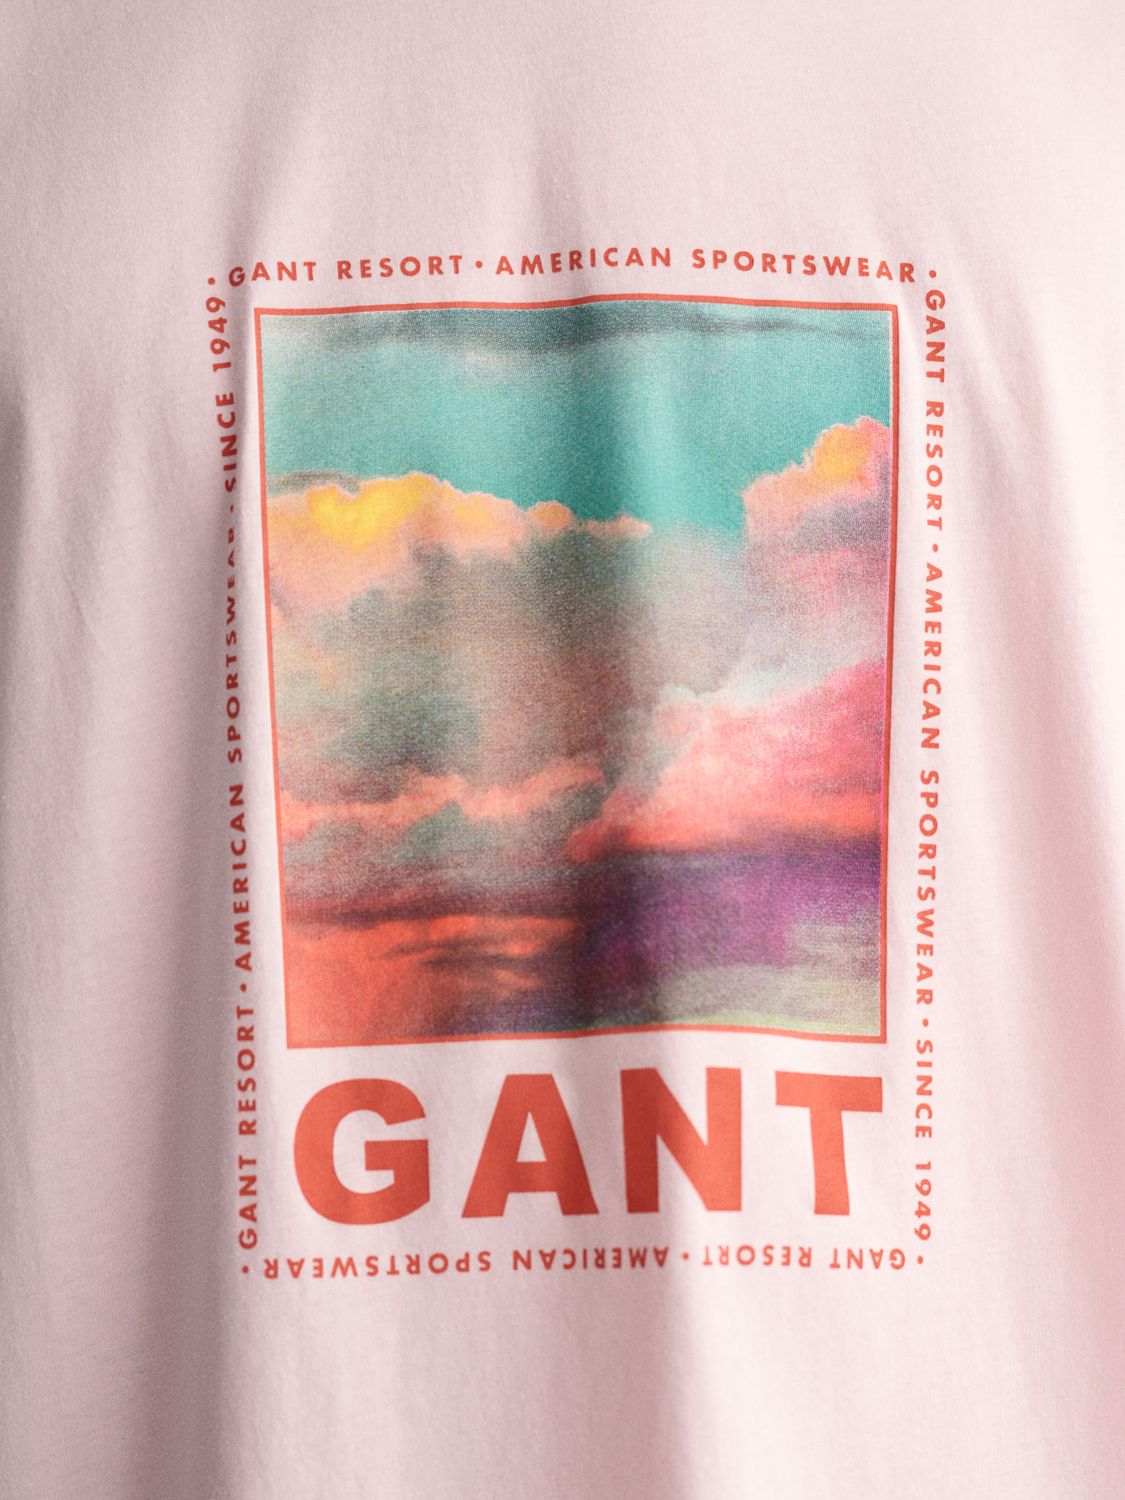 GANT Washed Graphic Short Sleeve T-Shirt, Pink/Multi, XL